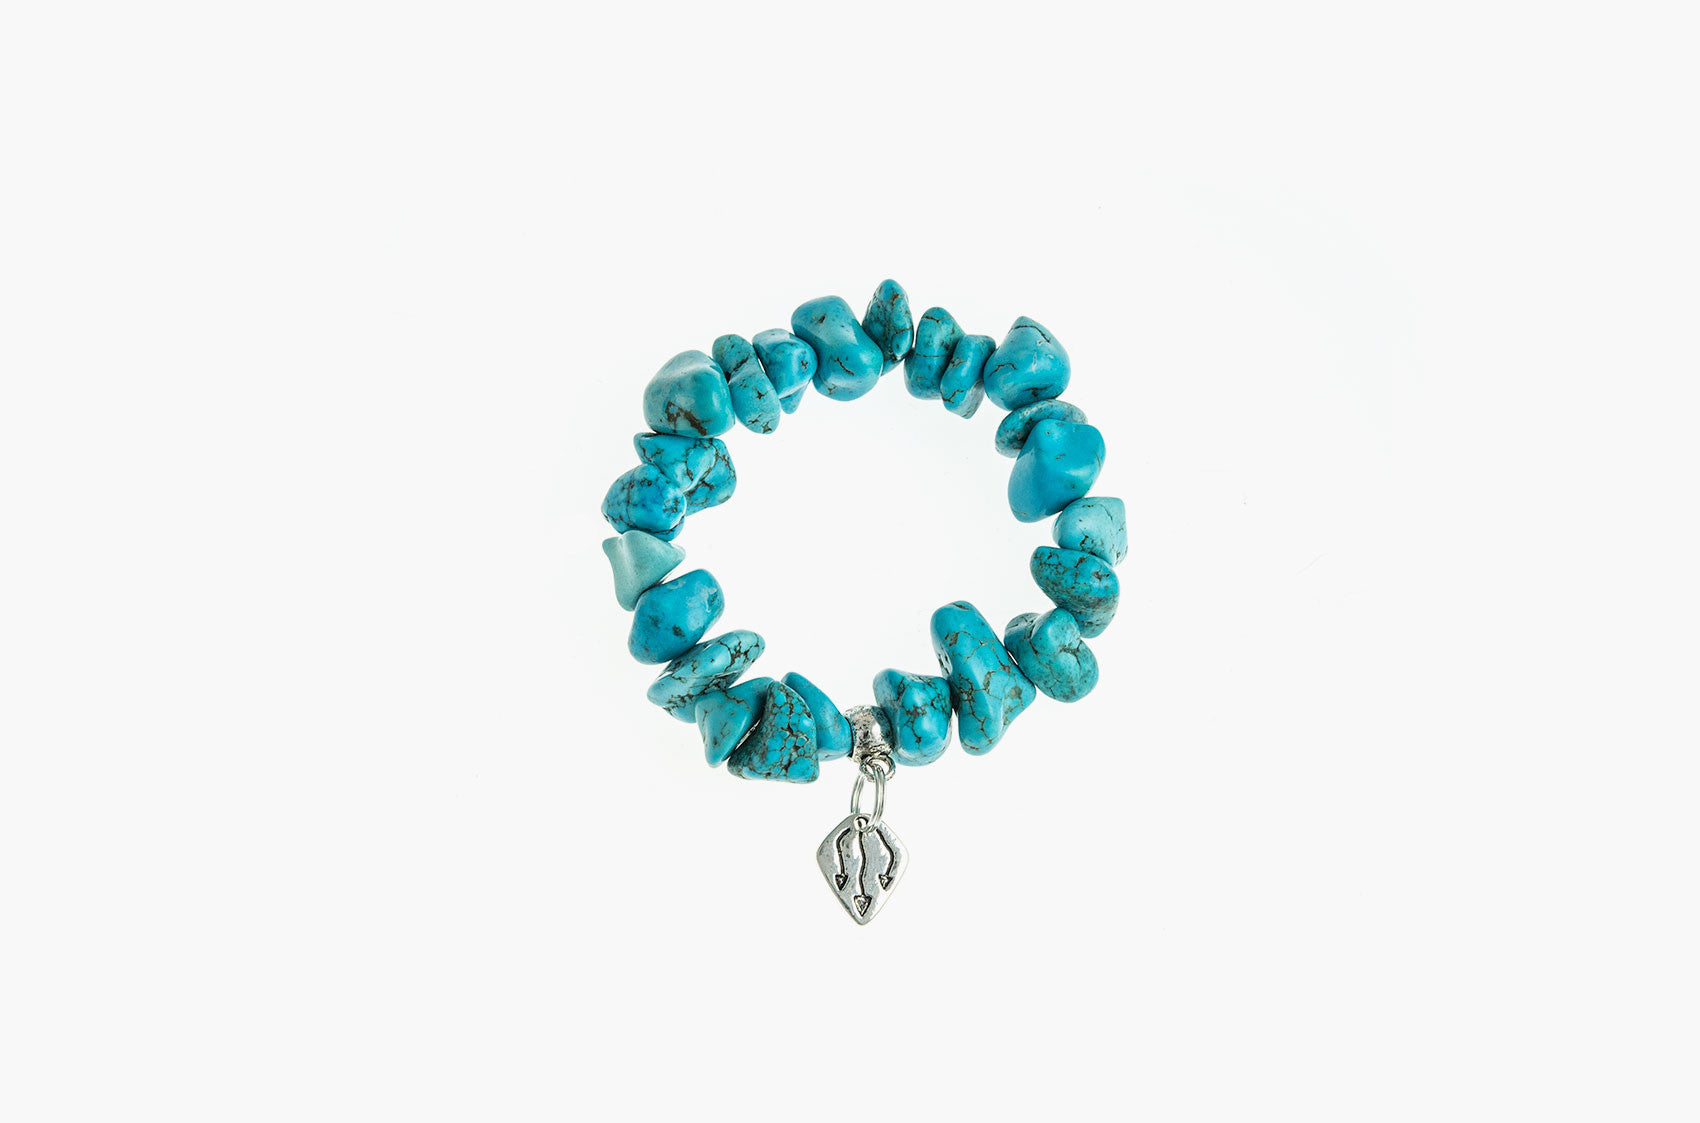 Pewter & Stone. Turquoise and pewter bracelet